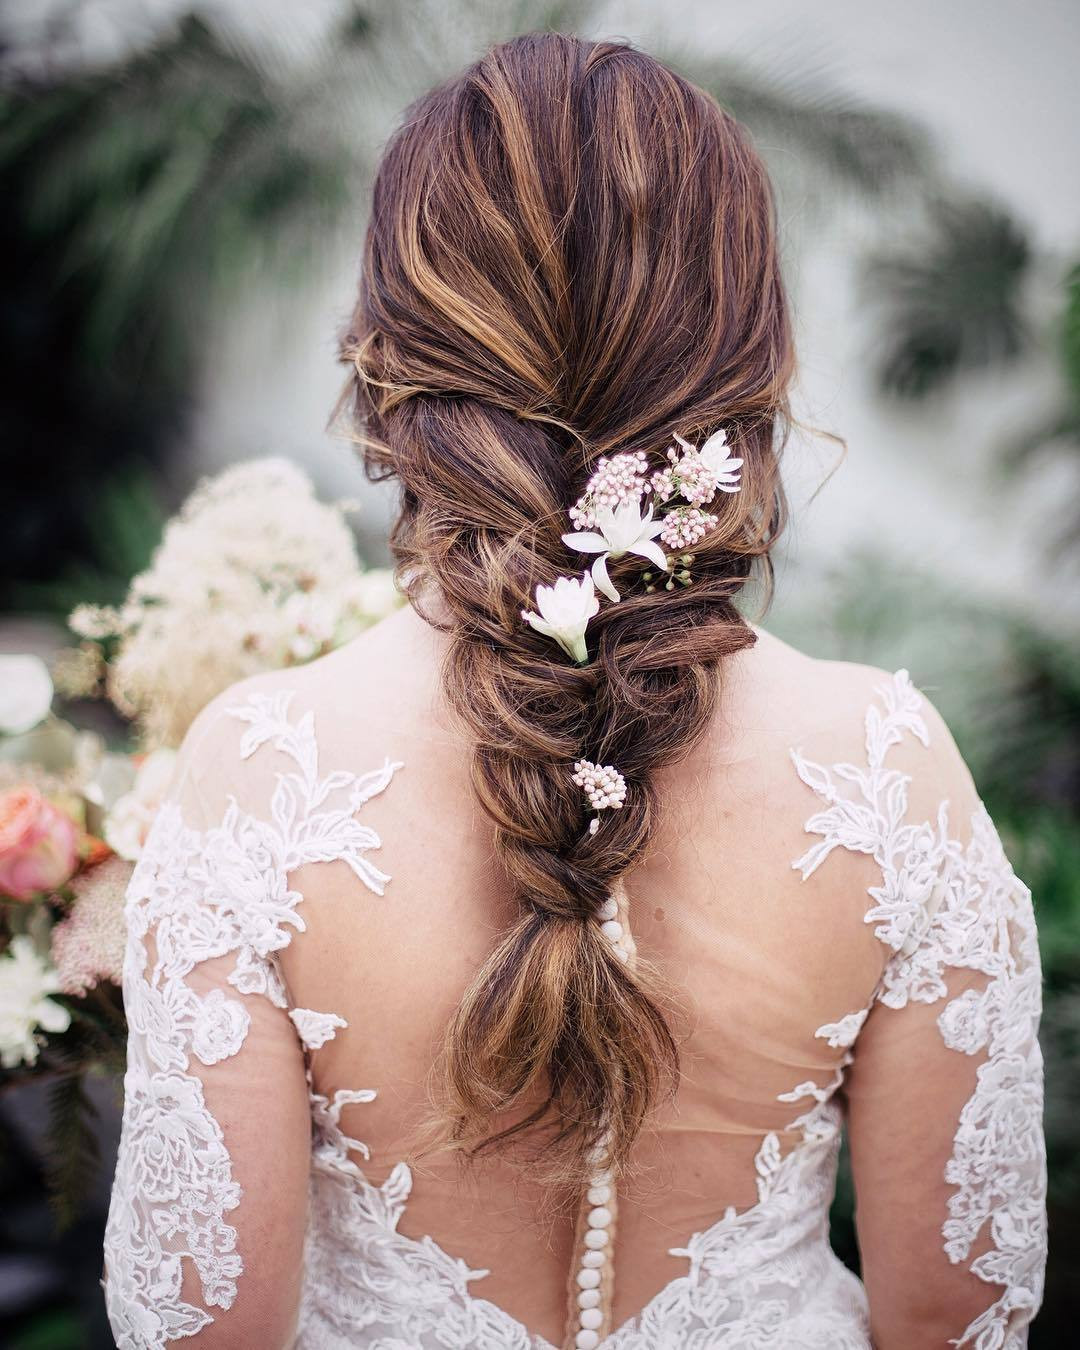 Wedding Hairstyles With Braid
 47 Stunning Wedding Hairstyles All Brides Will Love in 2019